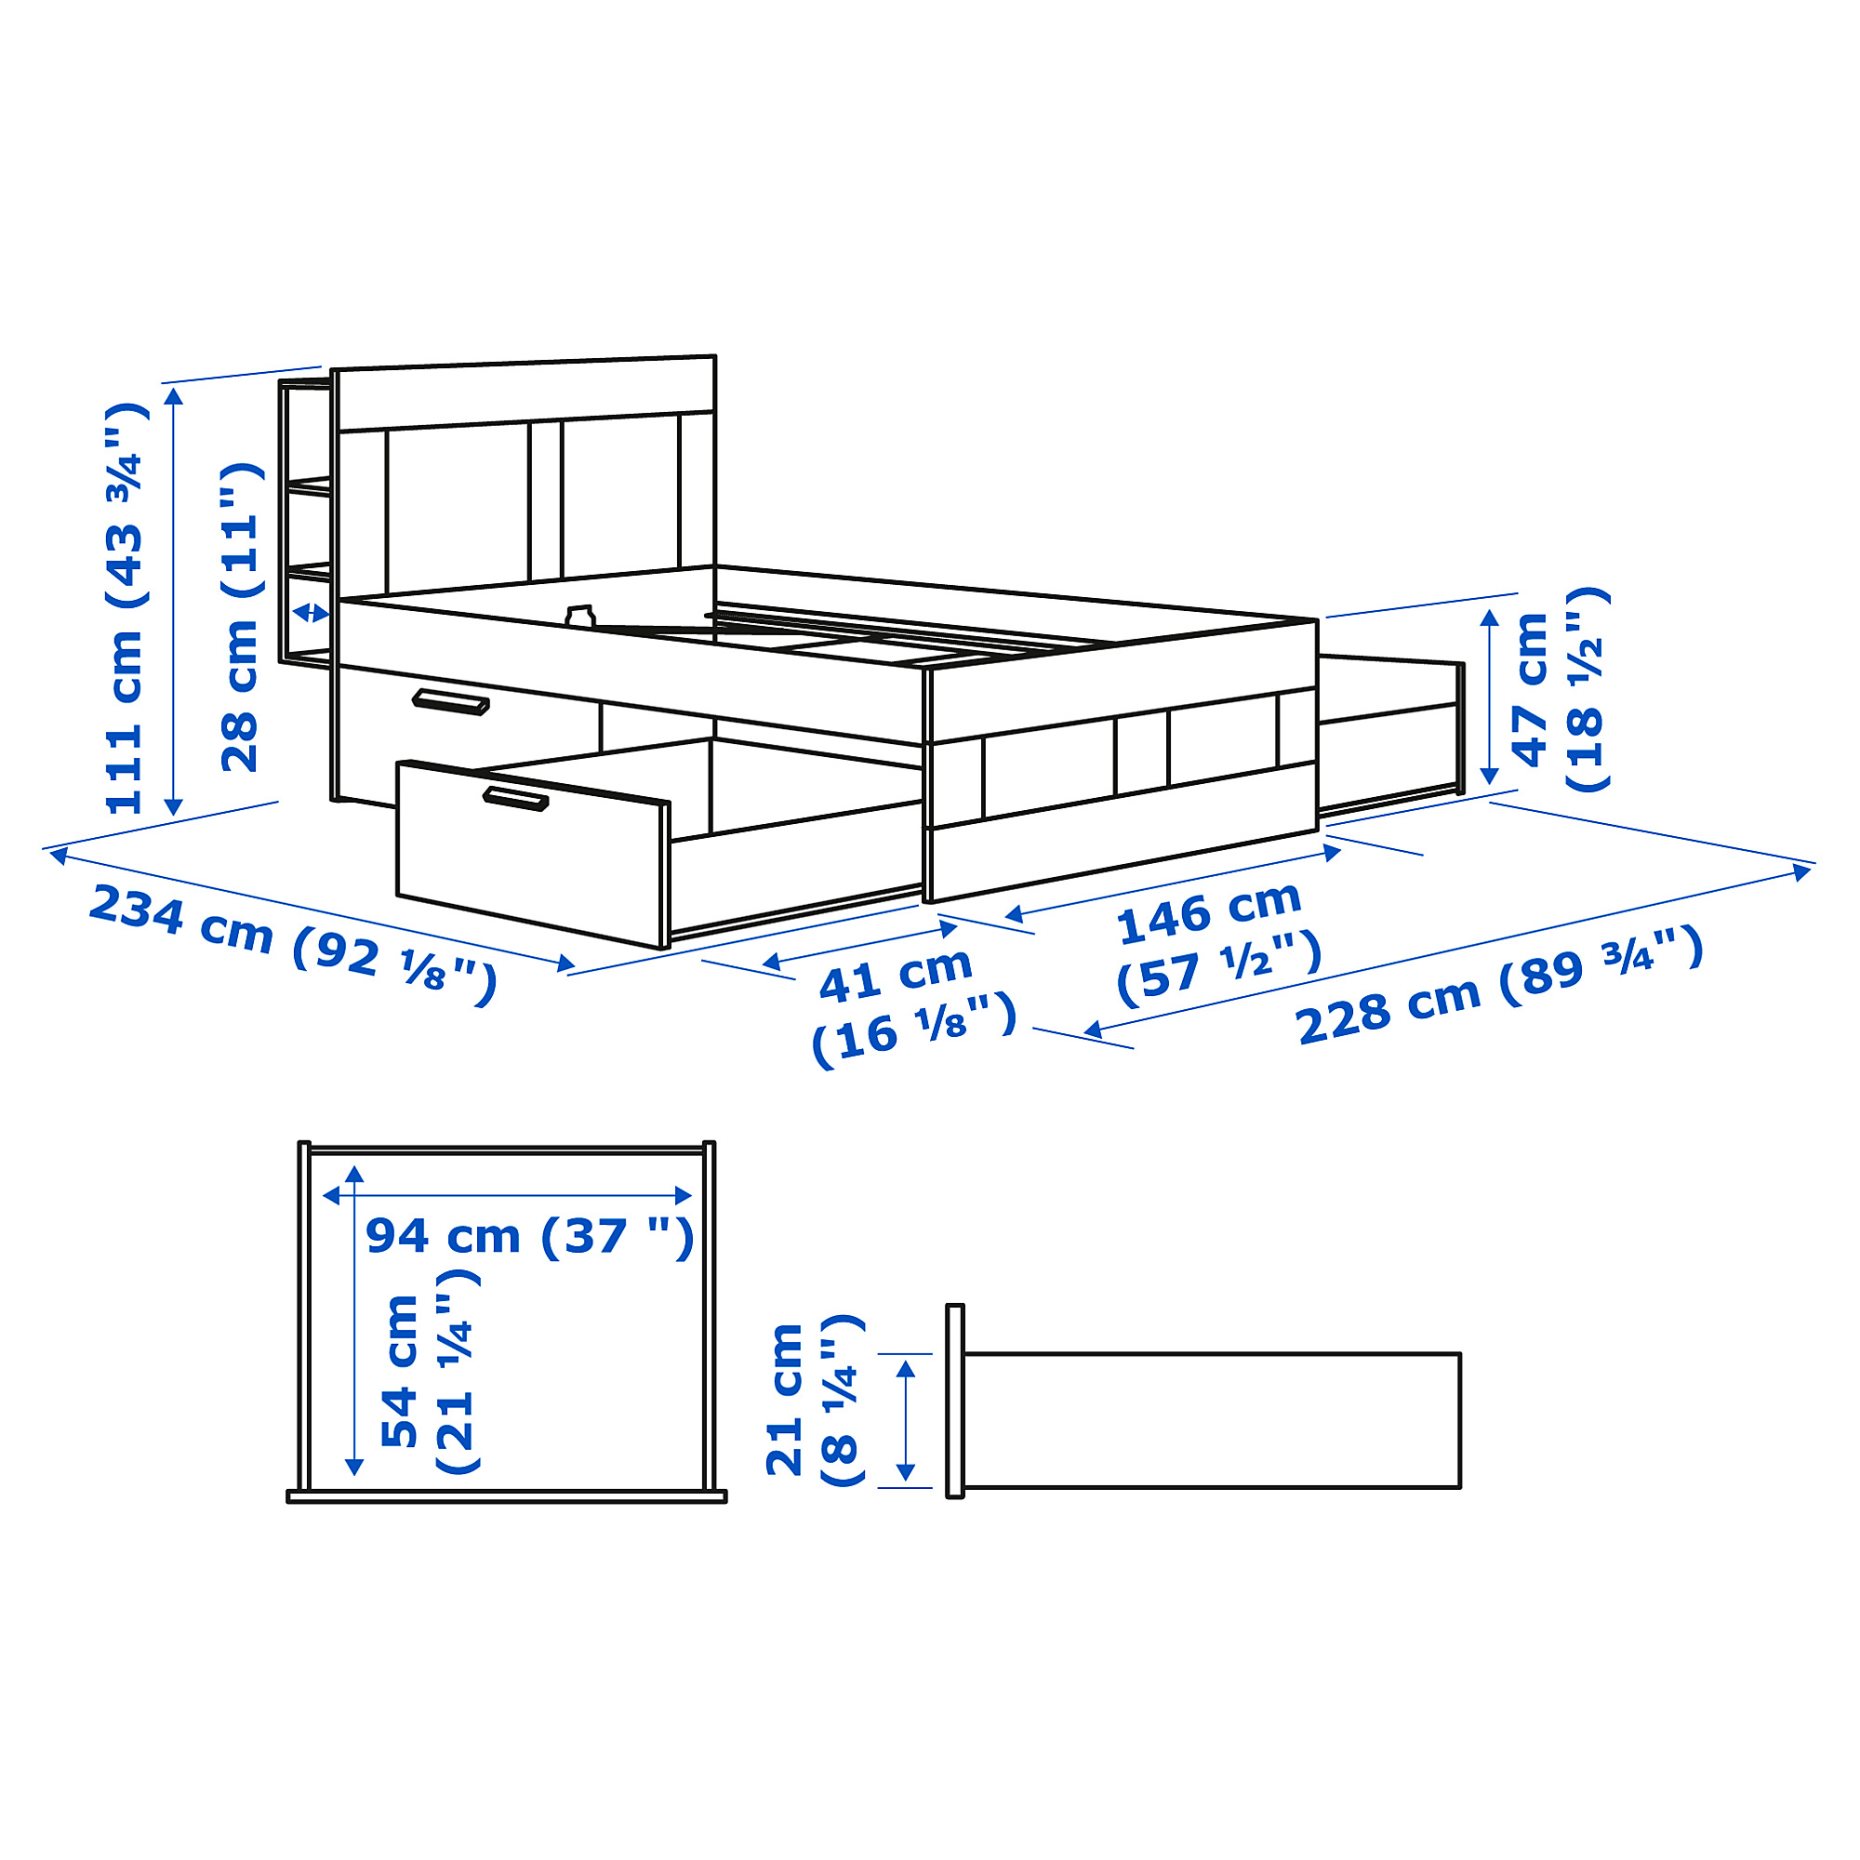 BRIMNES, bedroom furniture/set of 2, 140x200 cm, 094.879.02